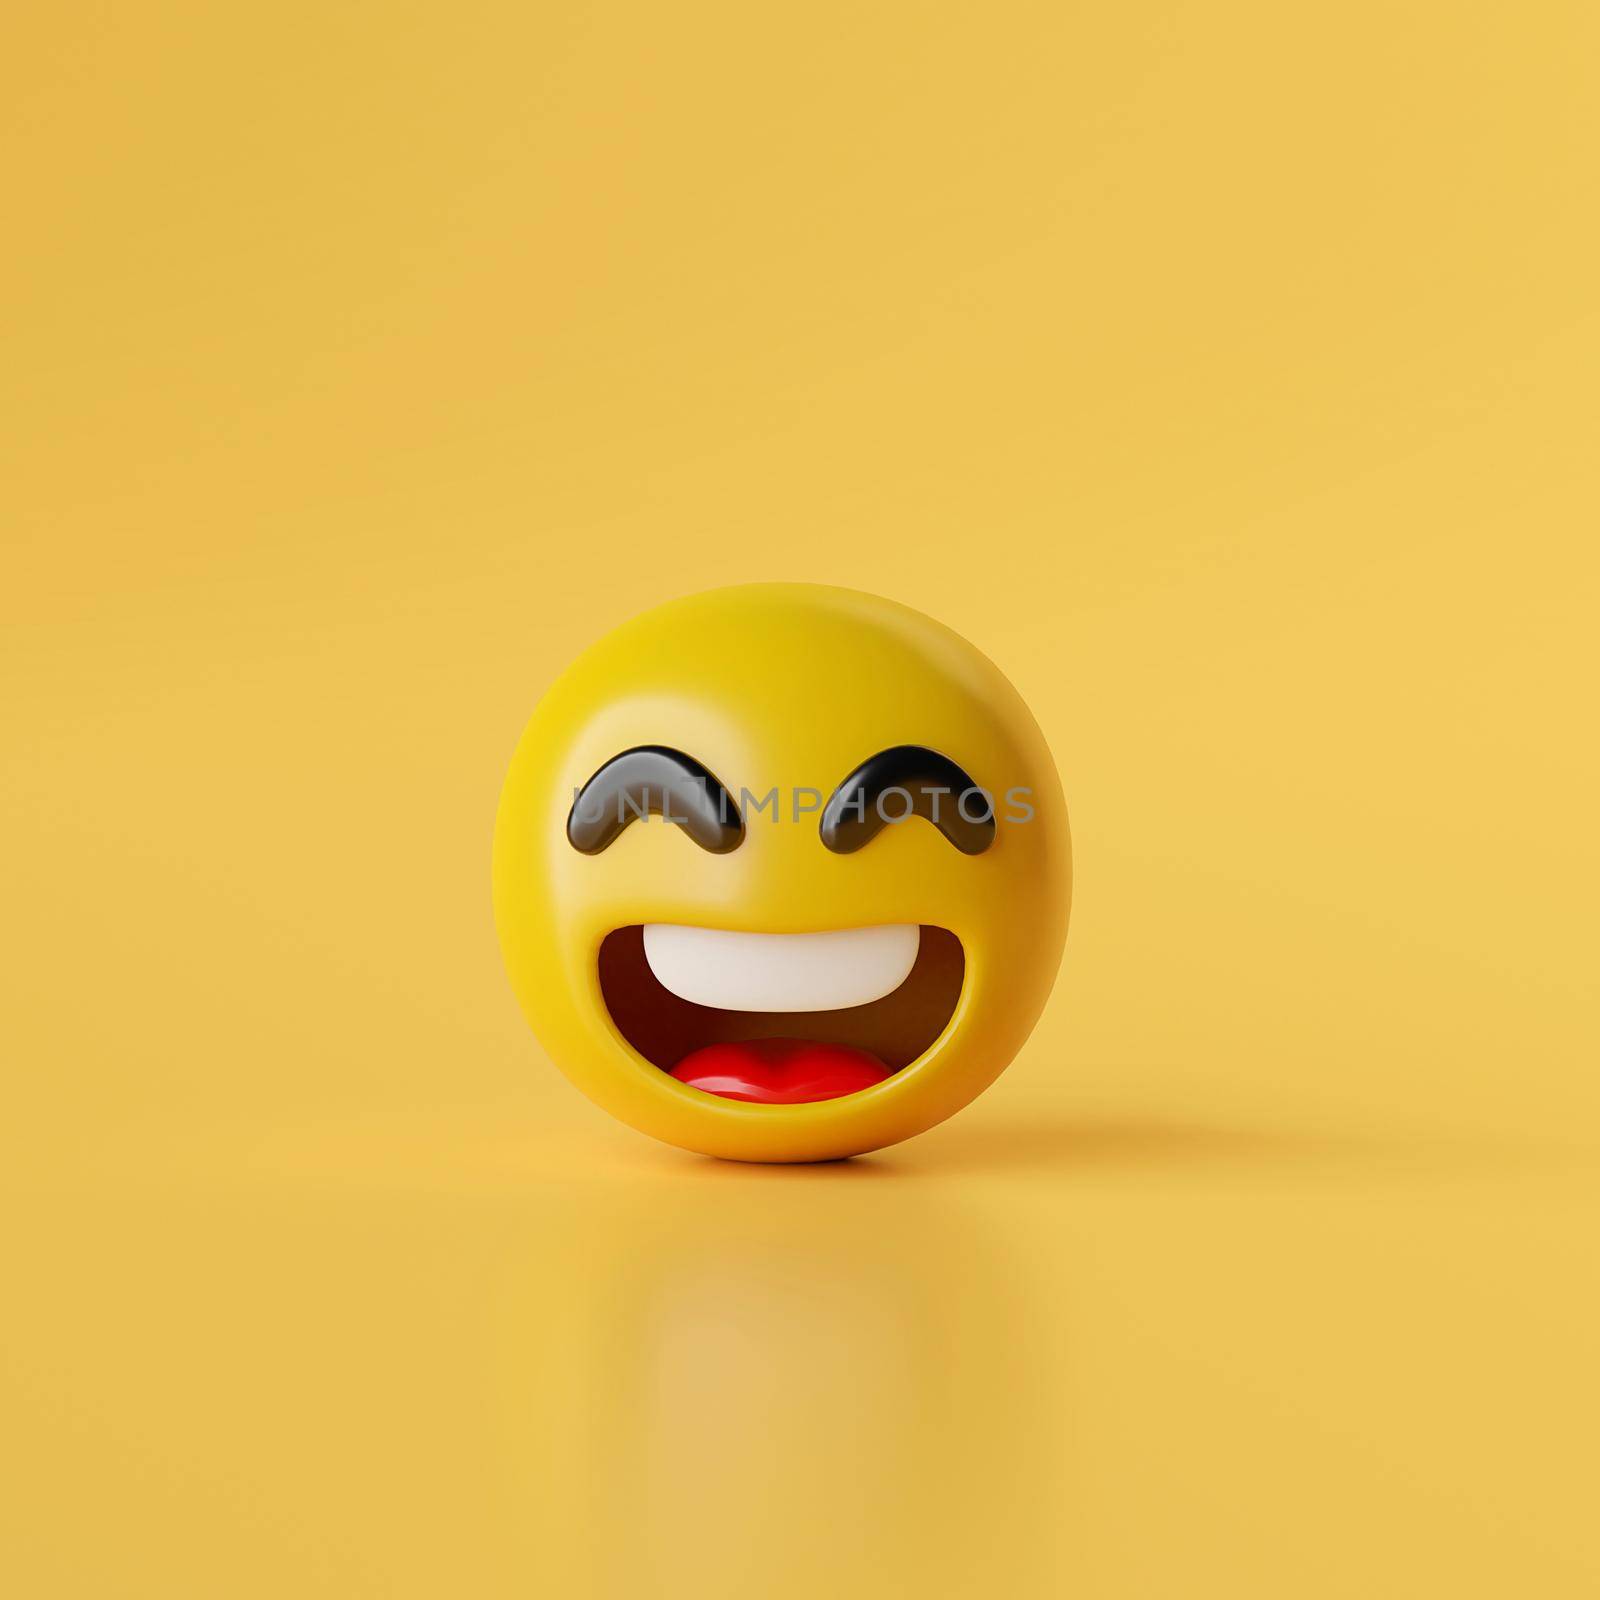 Smile emoji icons on yellow background, 3d illustration